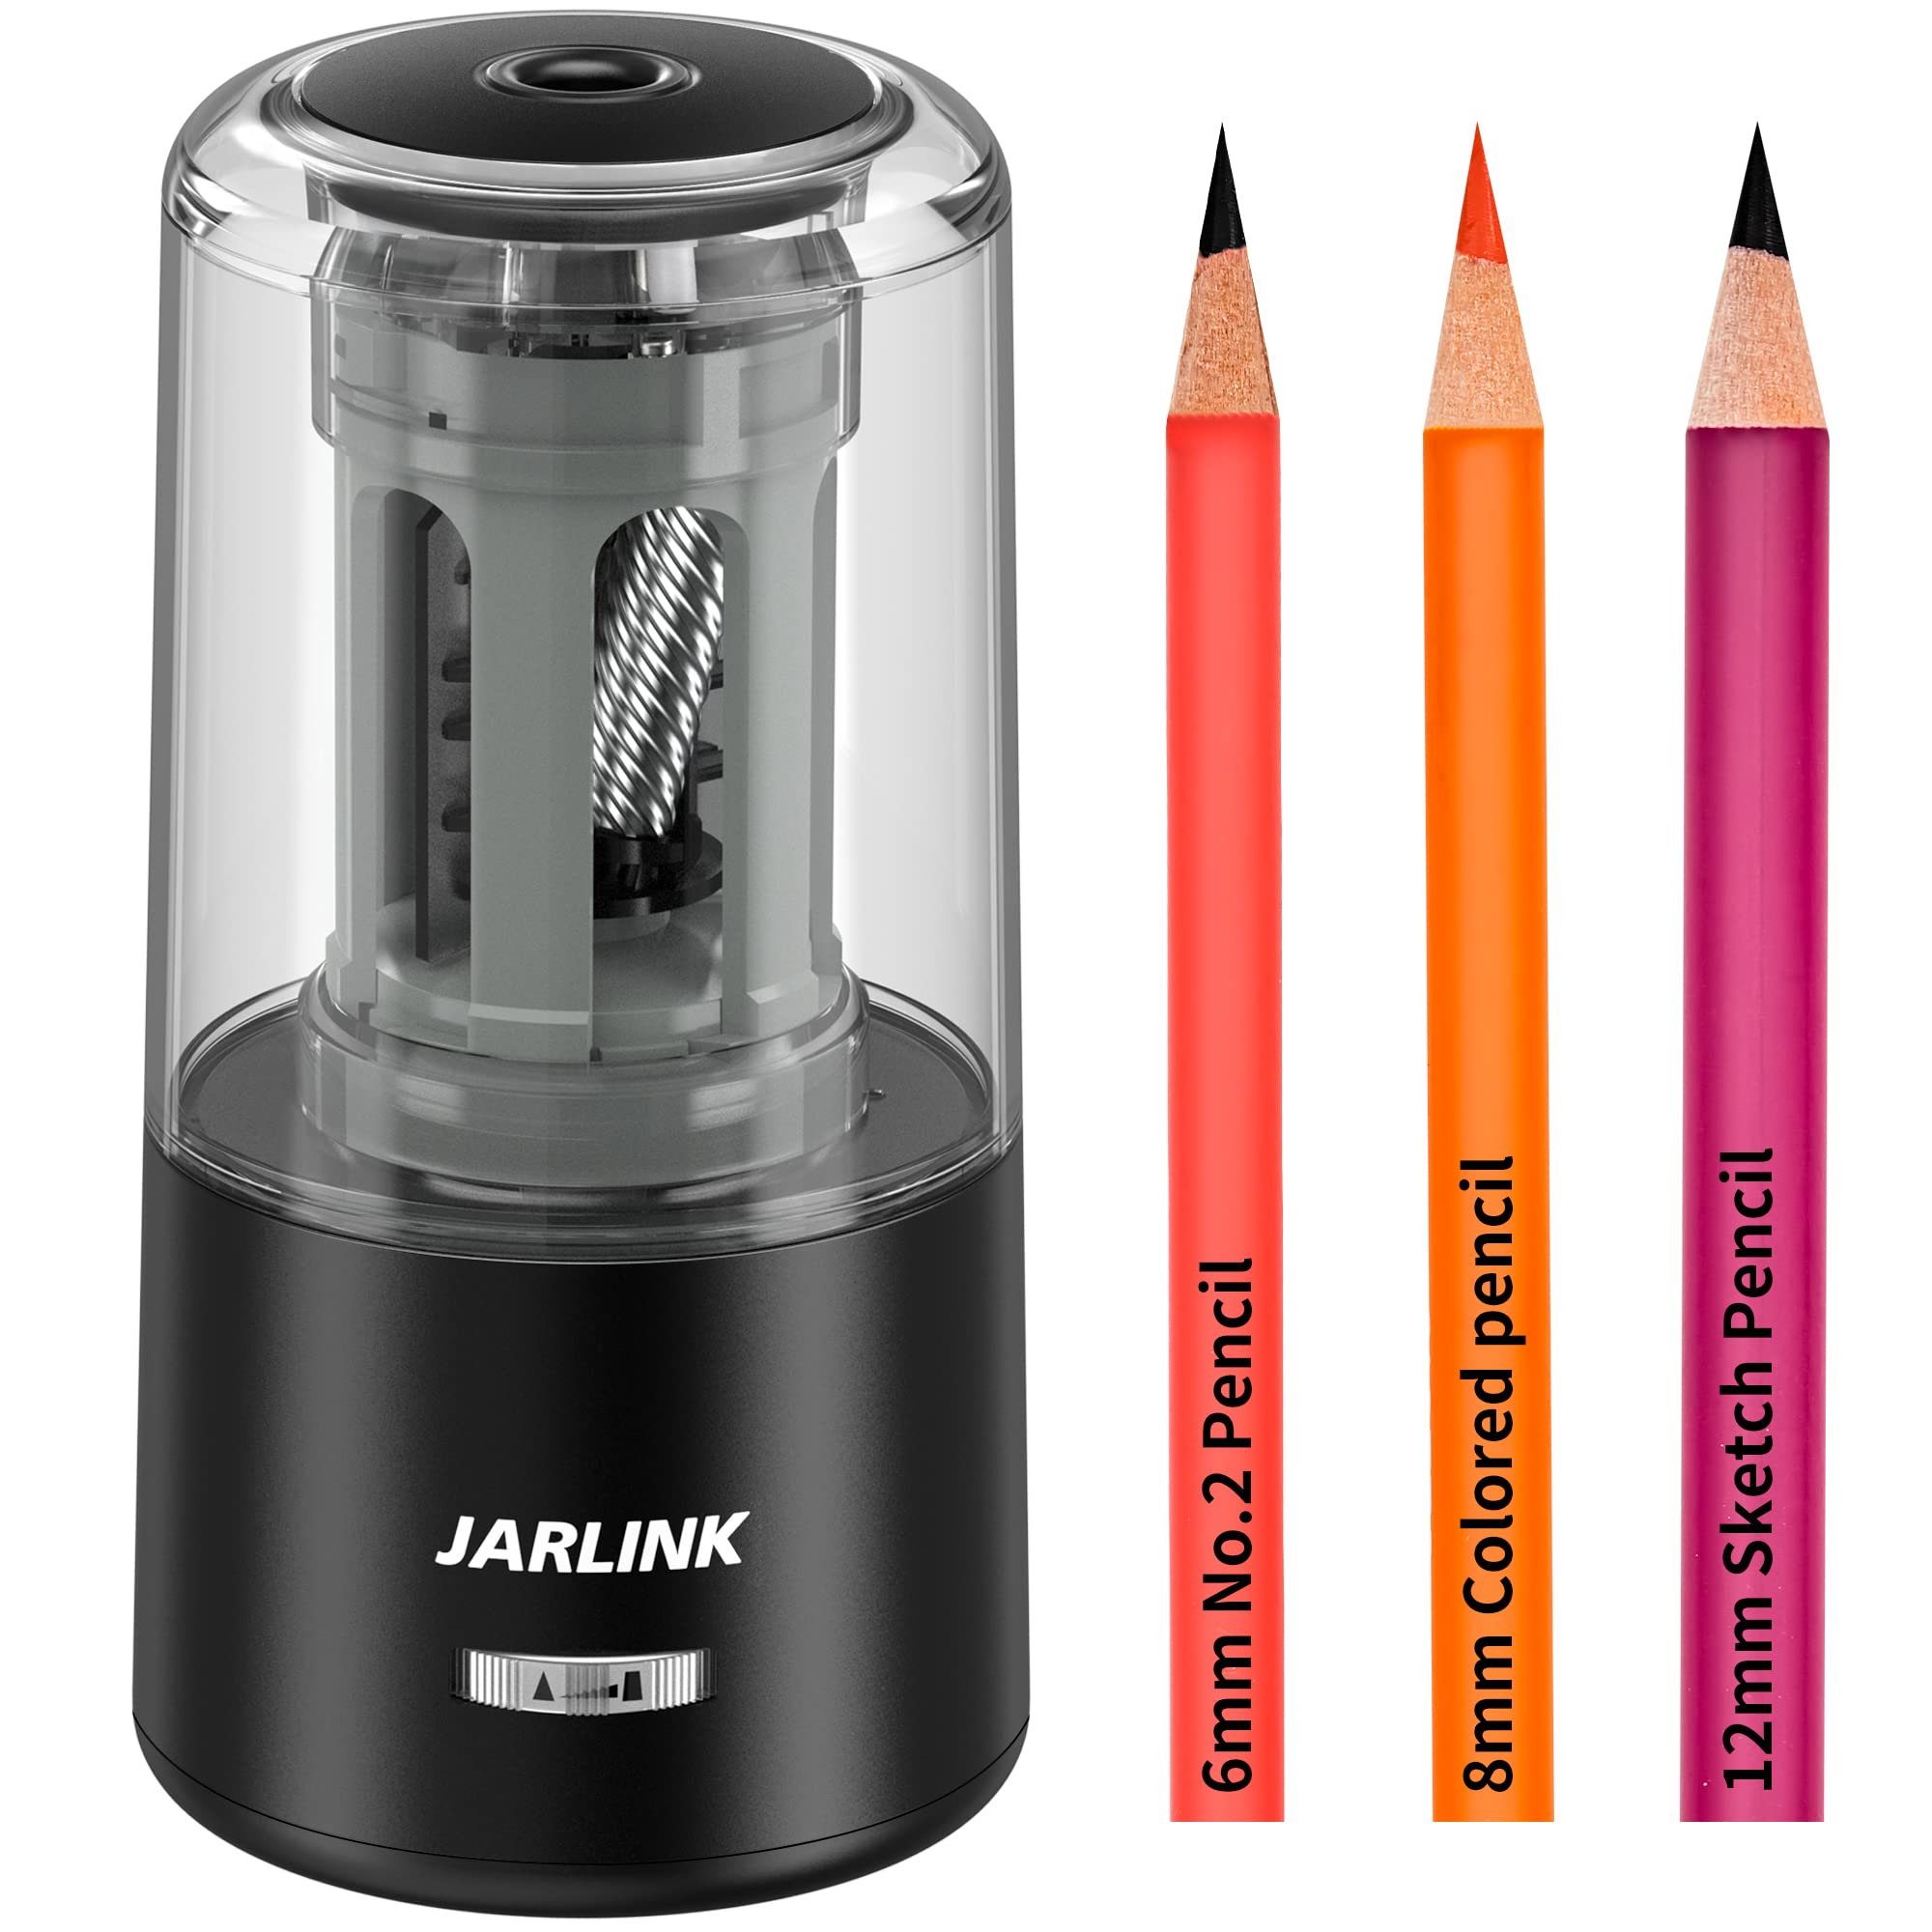 JARLINK Electric Pencil Sharpener Heavy Duty Pencil Sharpener for